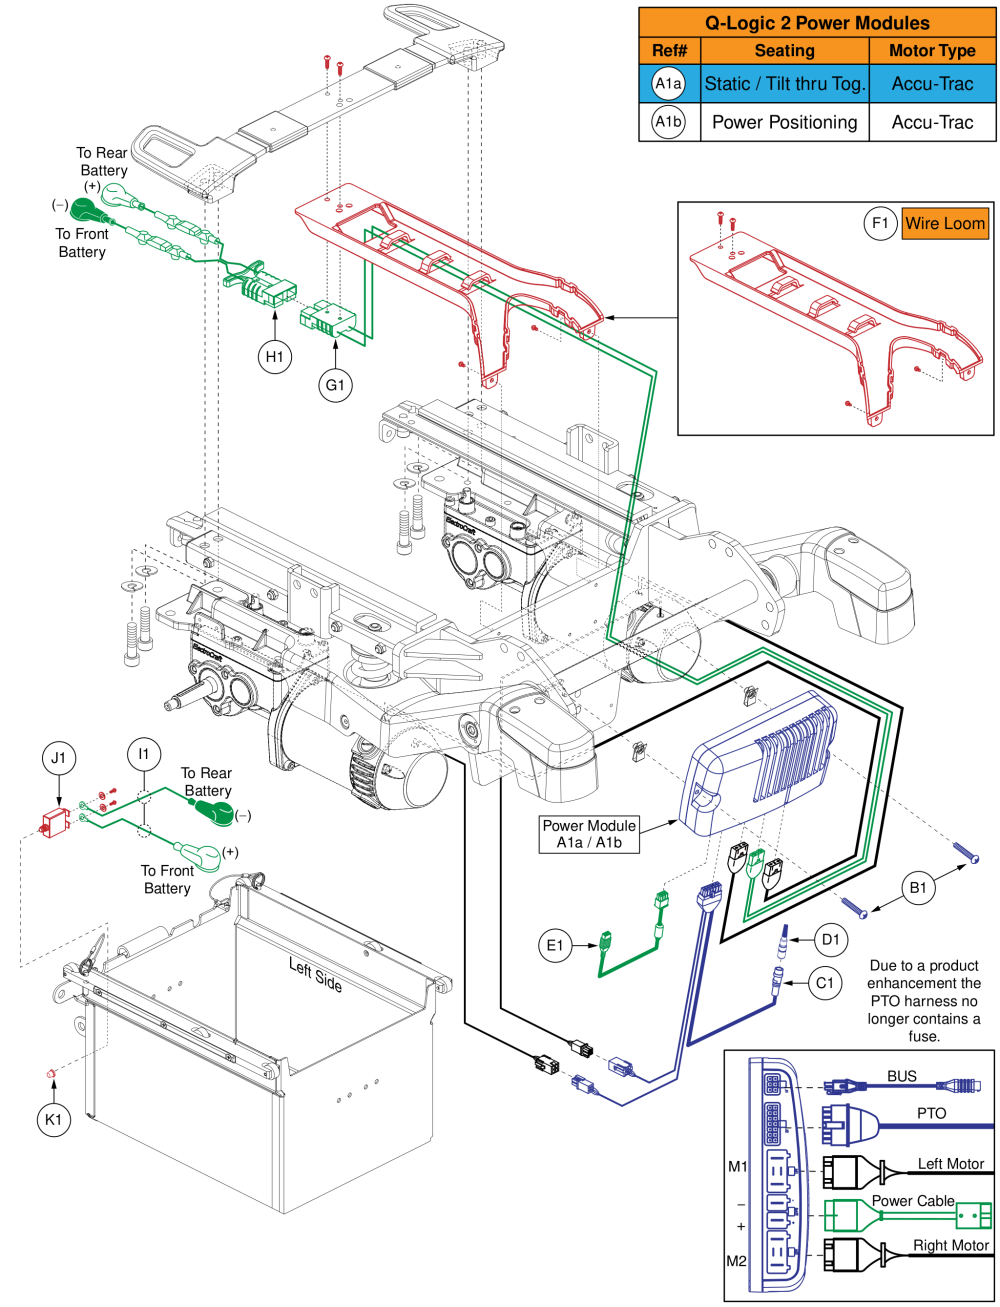 Q-logic 2 Power Modules & Harnesses, Accu-trac Motors, Rival (r44) parts diagram